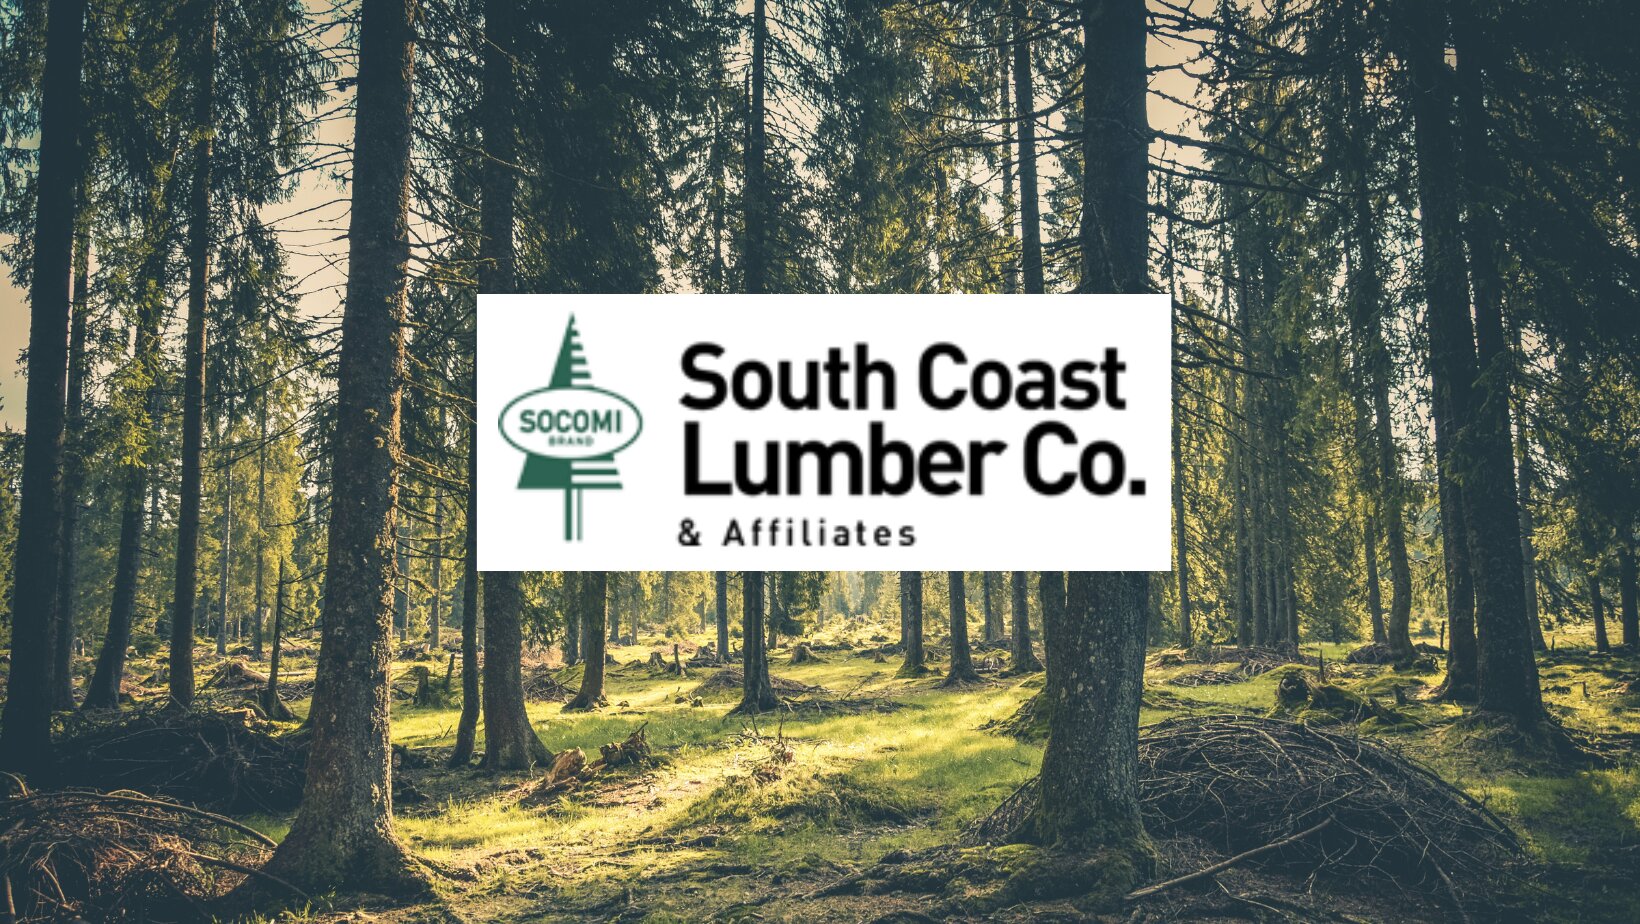 Lucidyne Scanner: South Coast Lumber